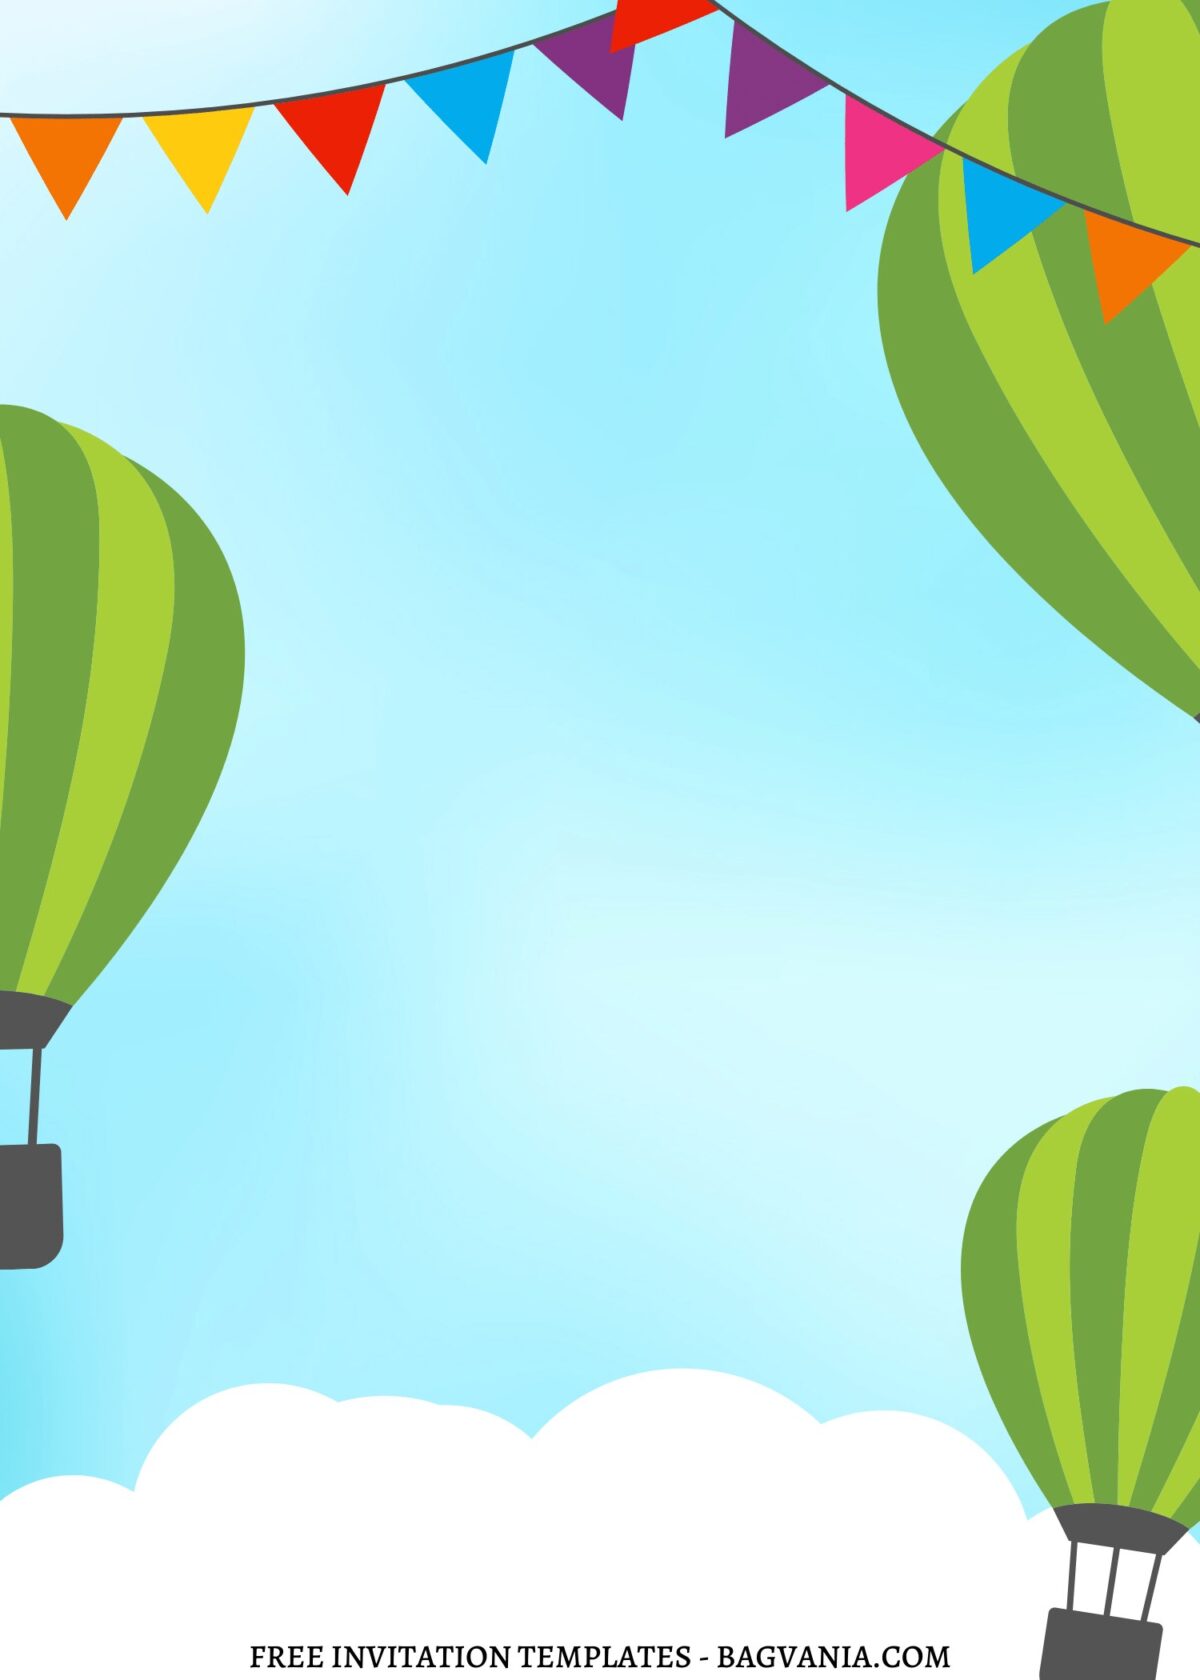 FREE EDITABLE - 10+ Safari Hot Air Balloon Canva Birthday Invitation Templates with sky background